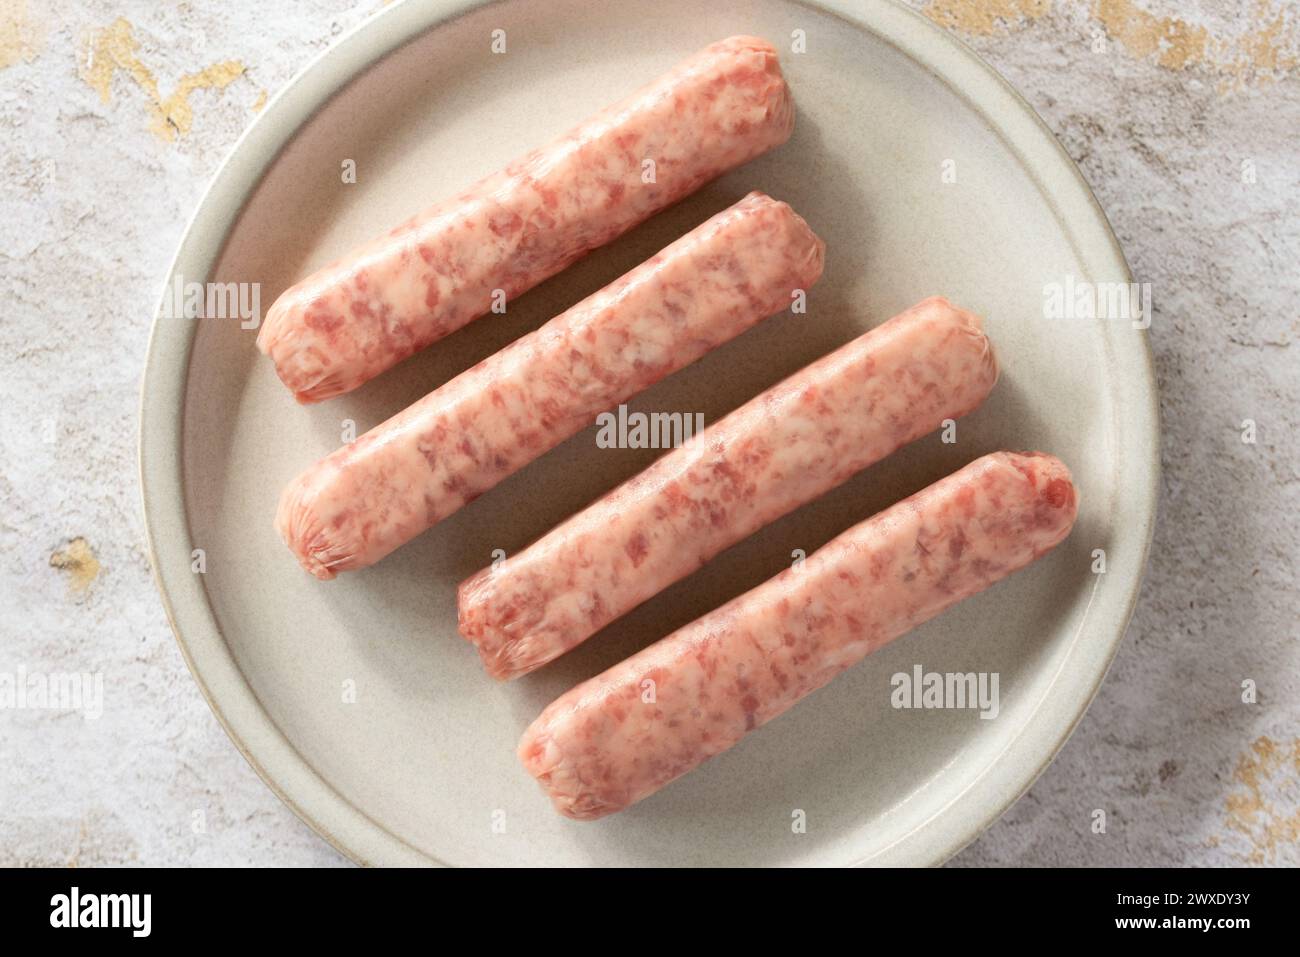 Uncooked Pork Breakfast Sausages Stock Photo